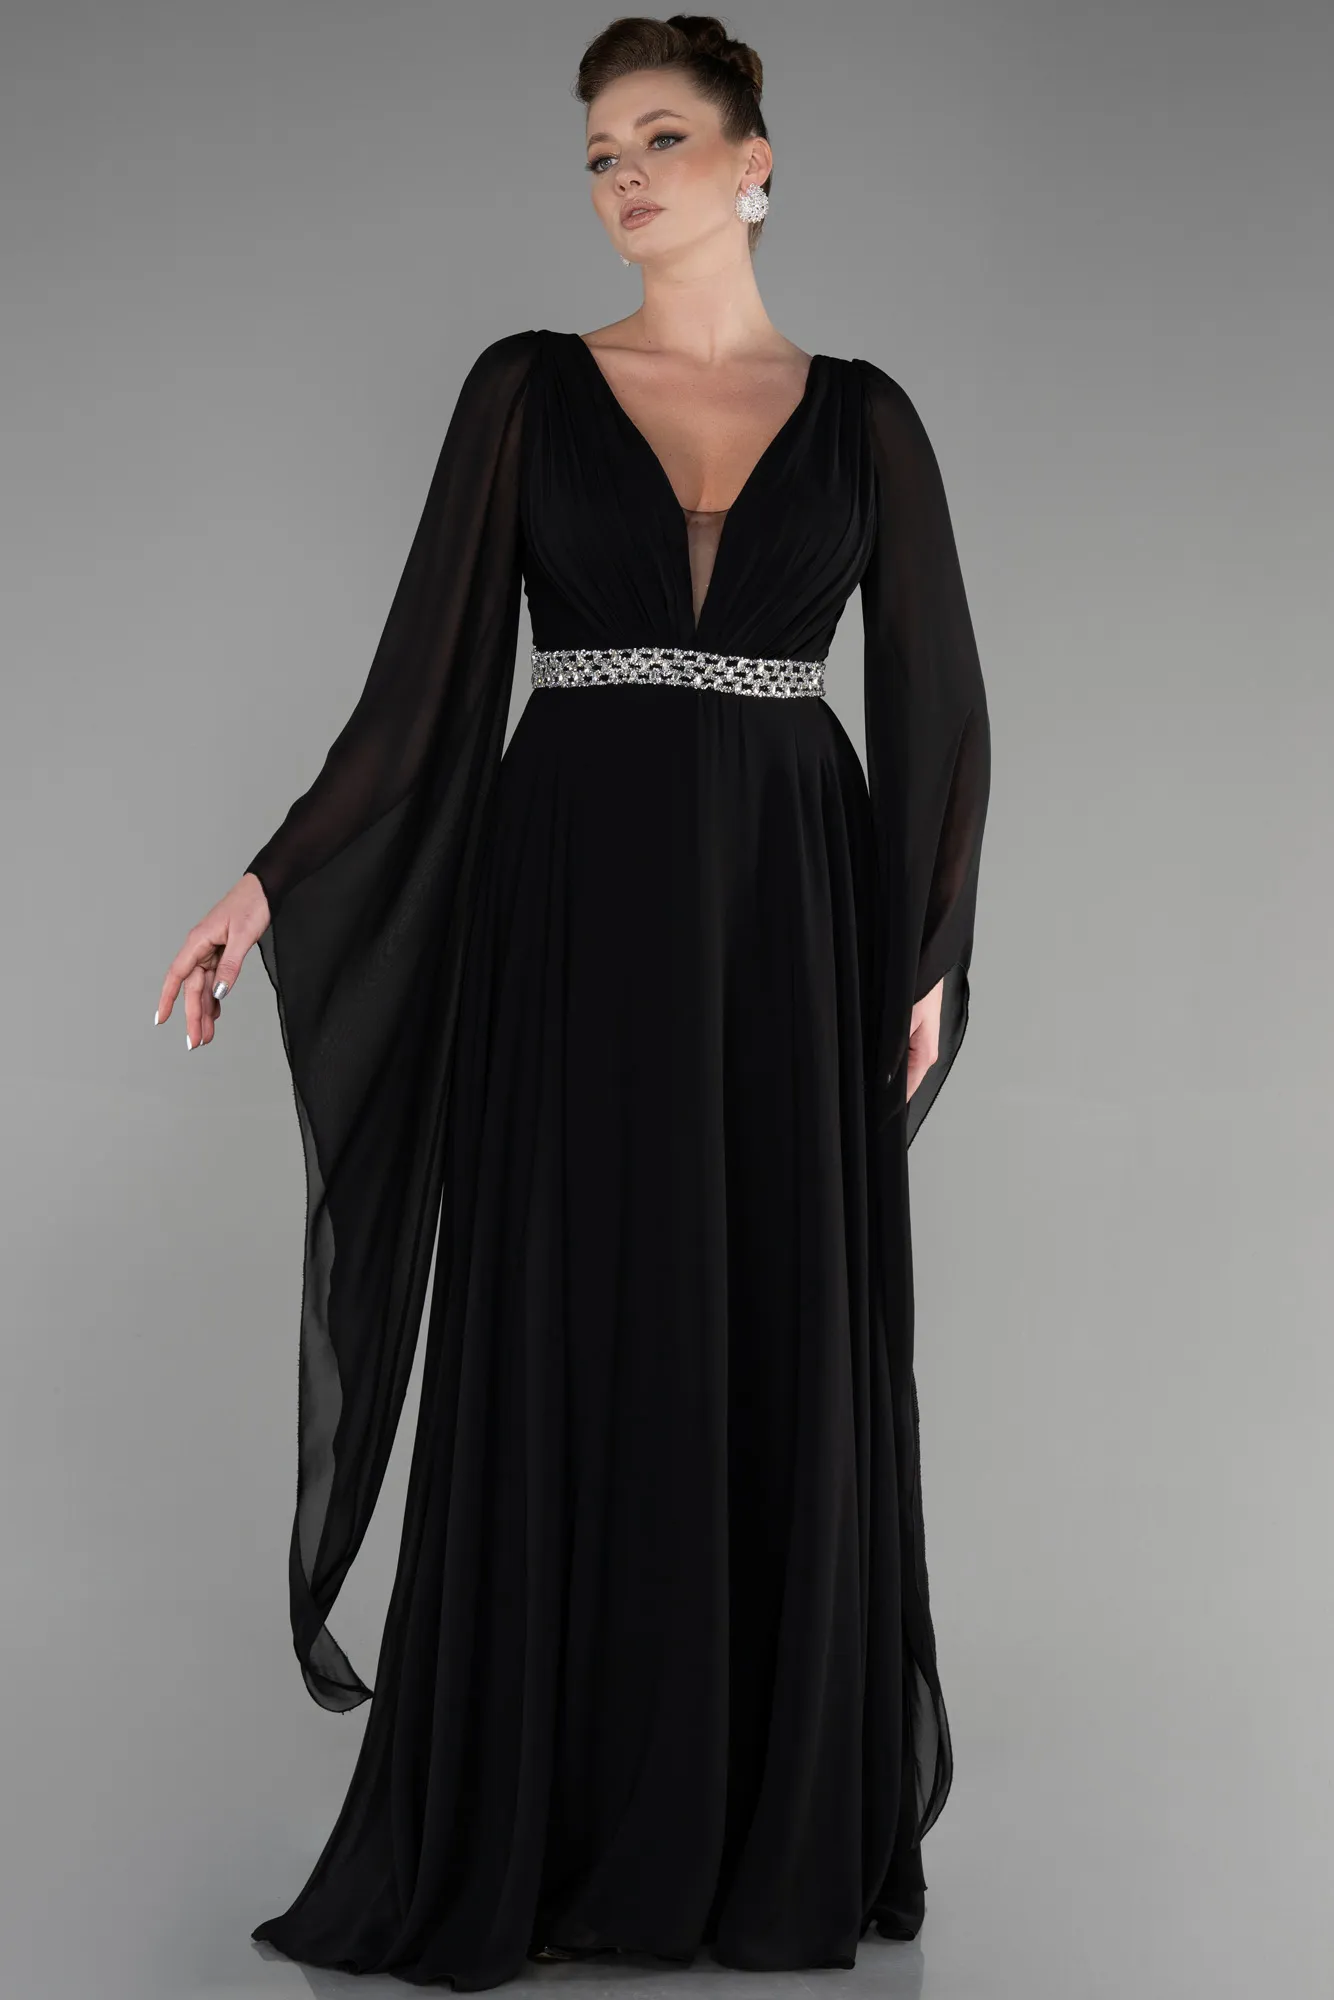 Black-Long Chiffon Evening Dress ABU3541